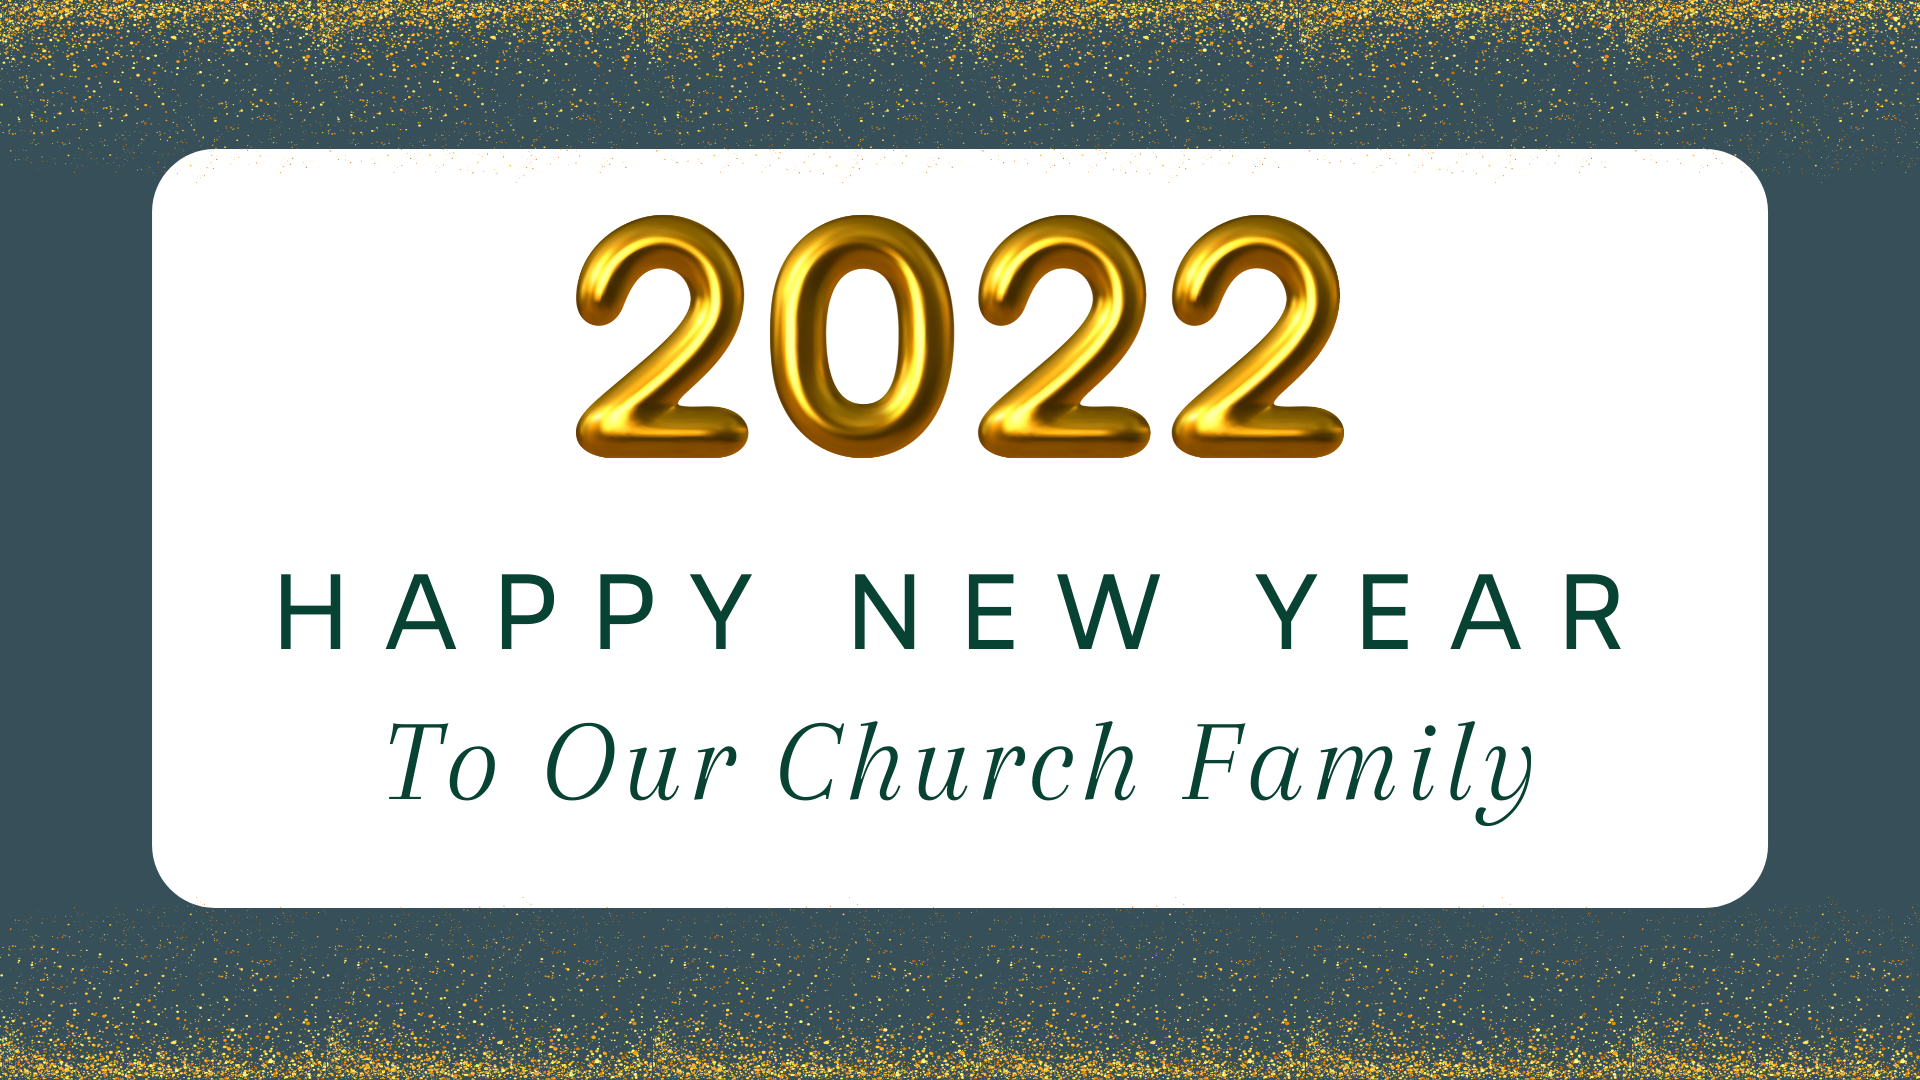 Copy of Christmas Morning Worship service 2021